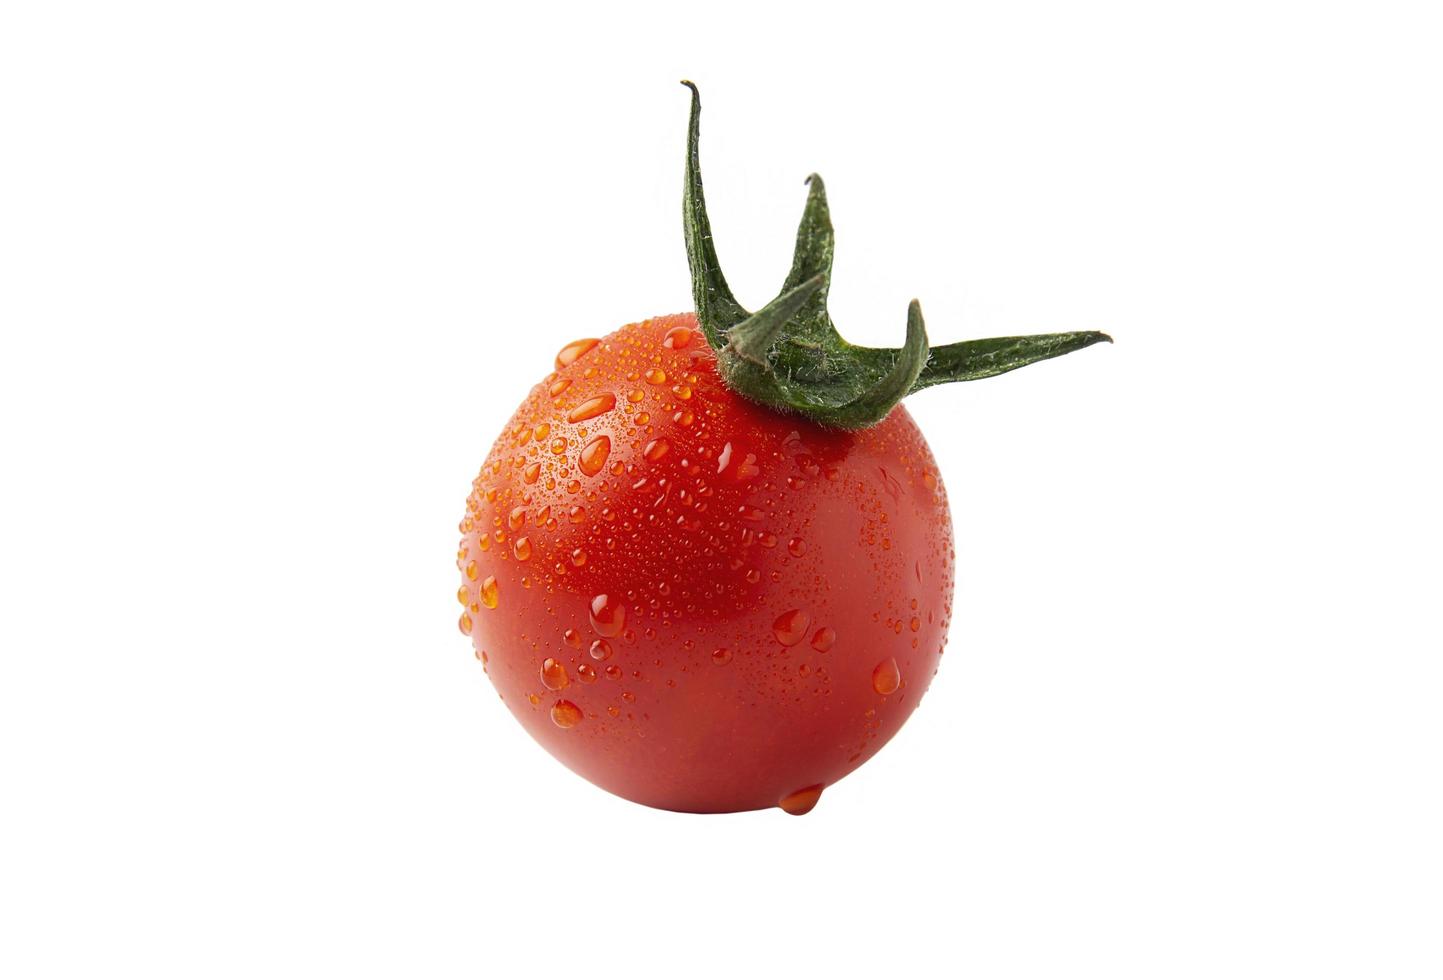 tomate rojo maduro aislado sobre fondo blanco - tomate fresco concepto vegetal saludable foto